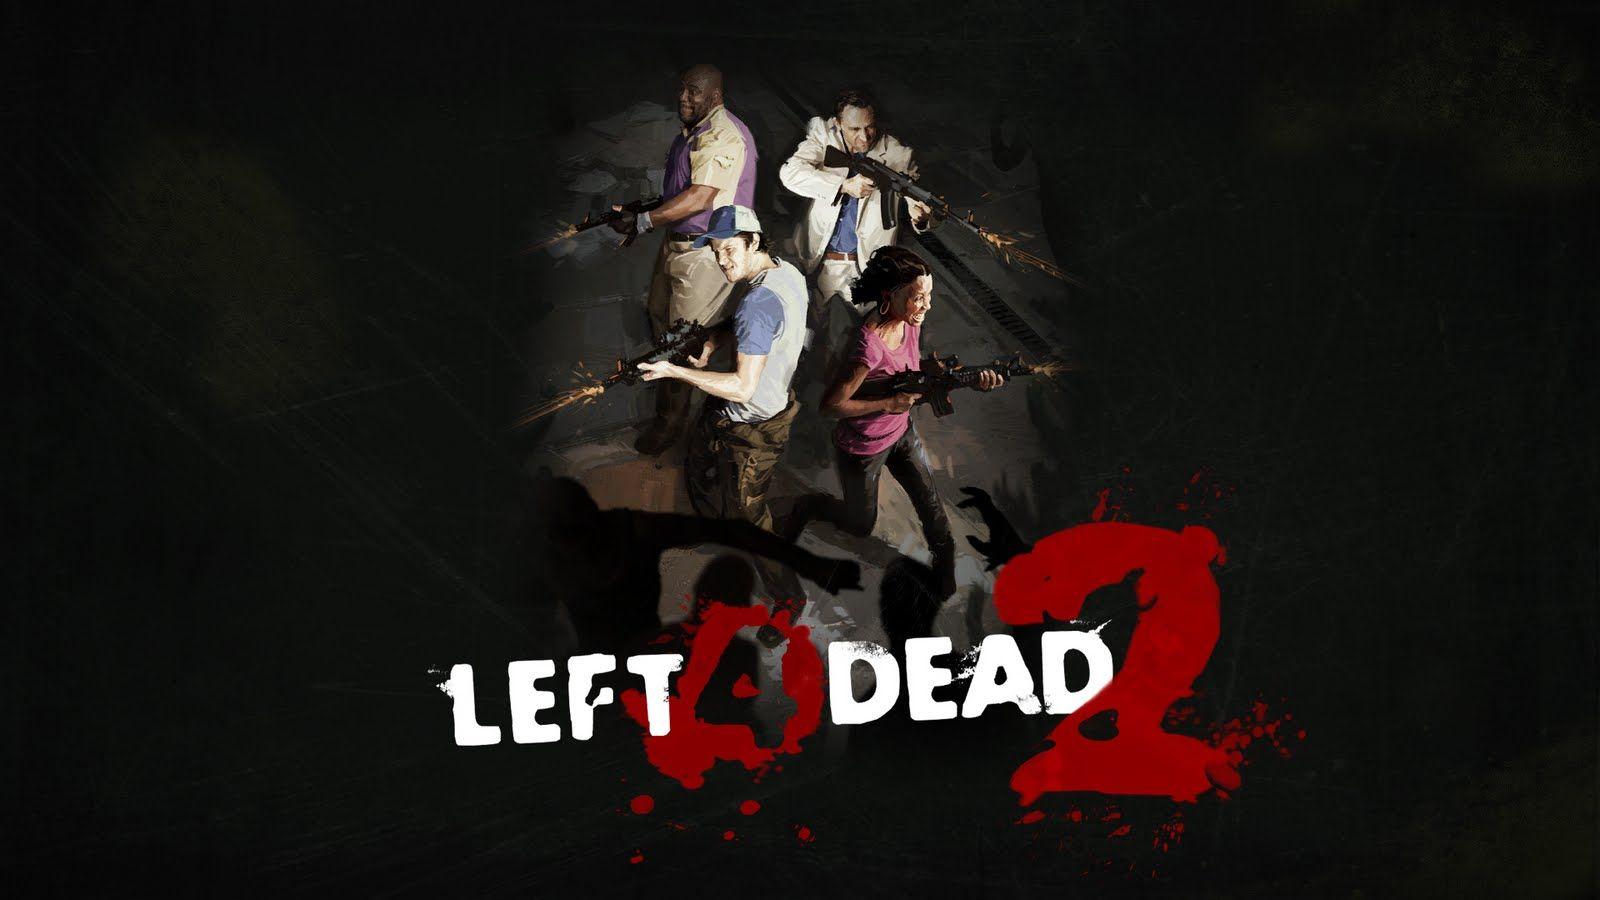 HD Quality Left 4 Dead 2 Image, Left 4 Dead 2 Wallpaper HD Base